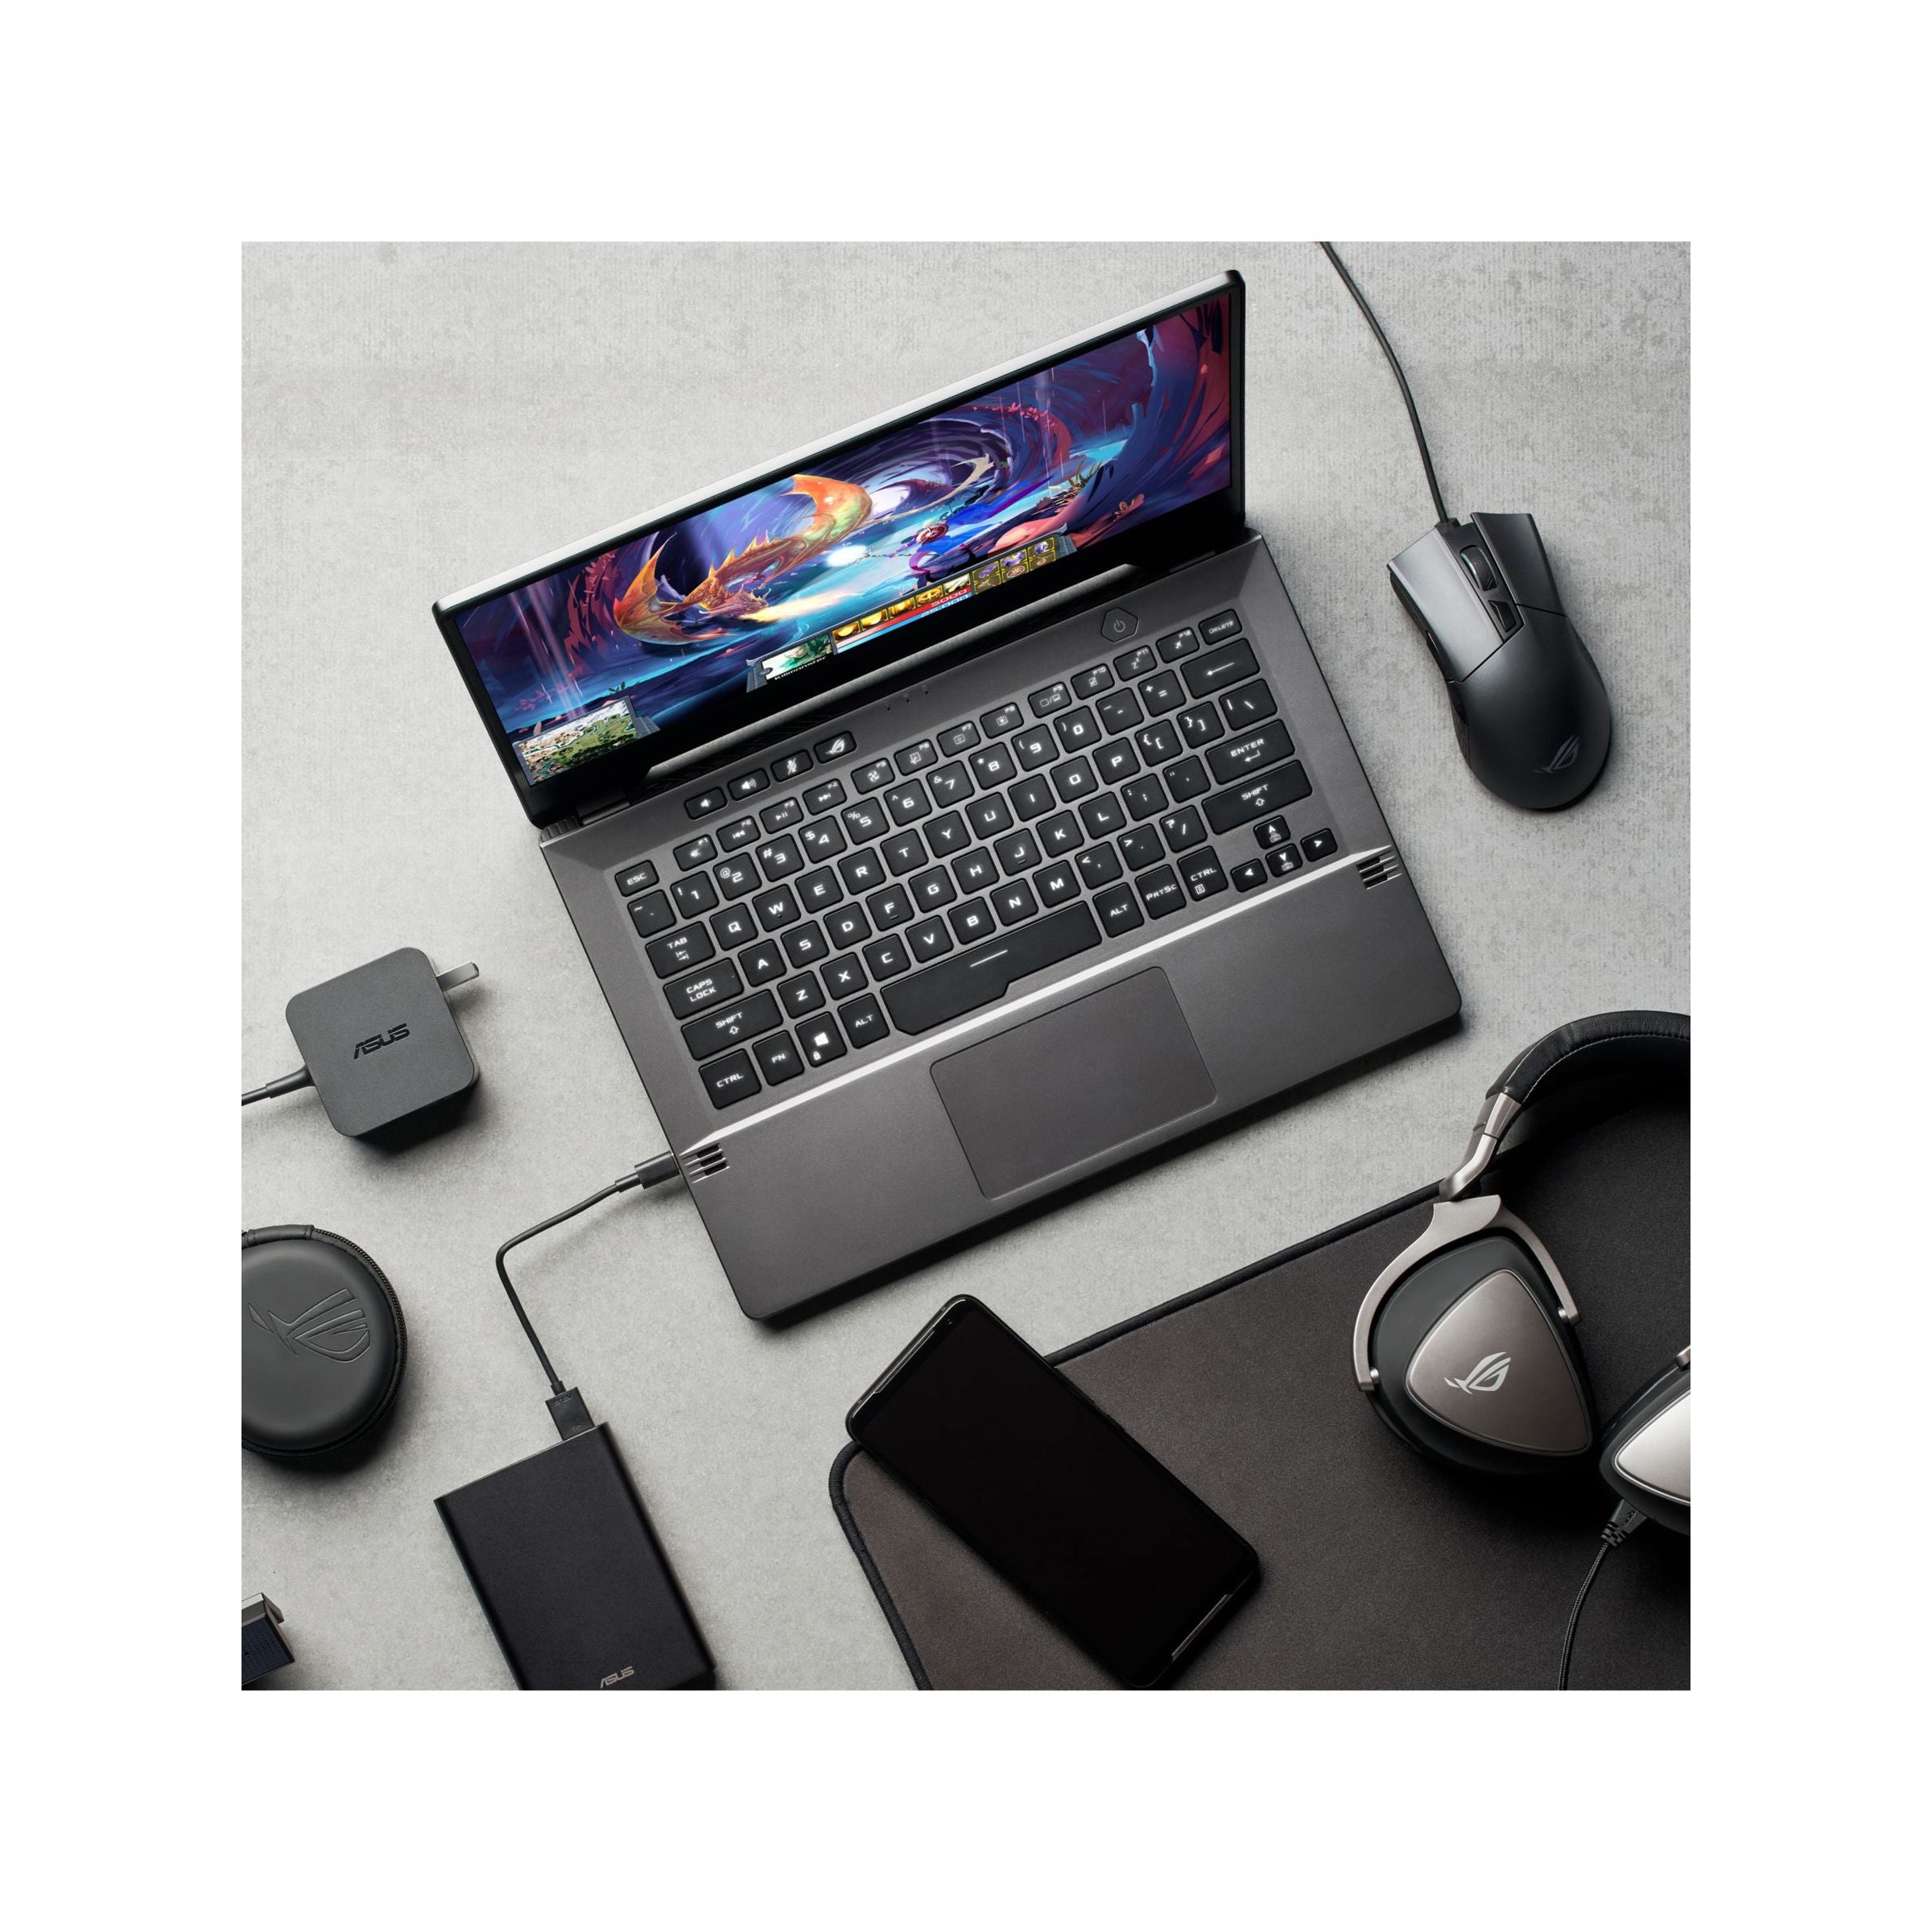 ASUS ROG Zephyrus G14 GA401IU-HE001T Gaming Laptop, AMD Ryzen R7 Processor, 16GB RAM, 512GB SSD, 14" Full HD, Grey Charcoal